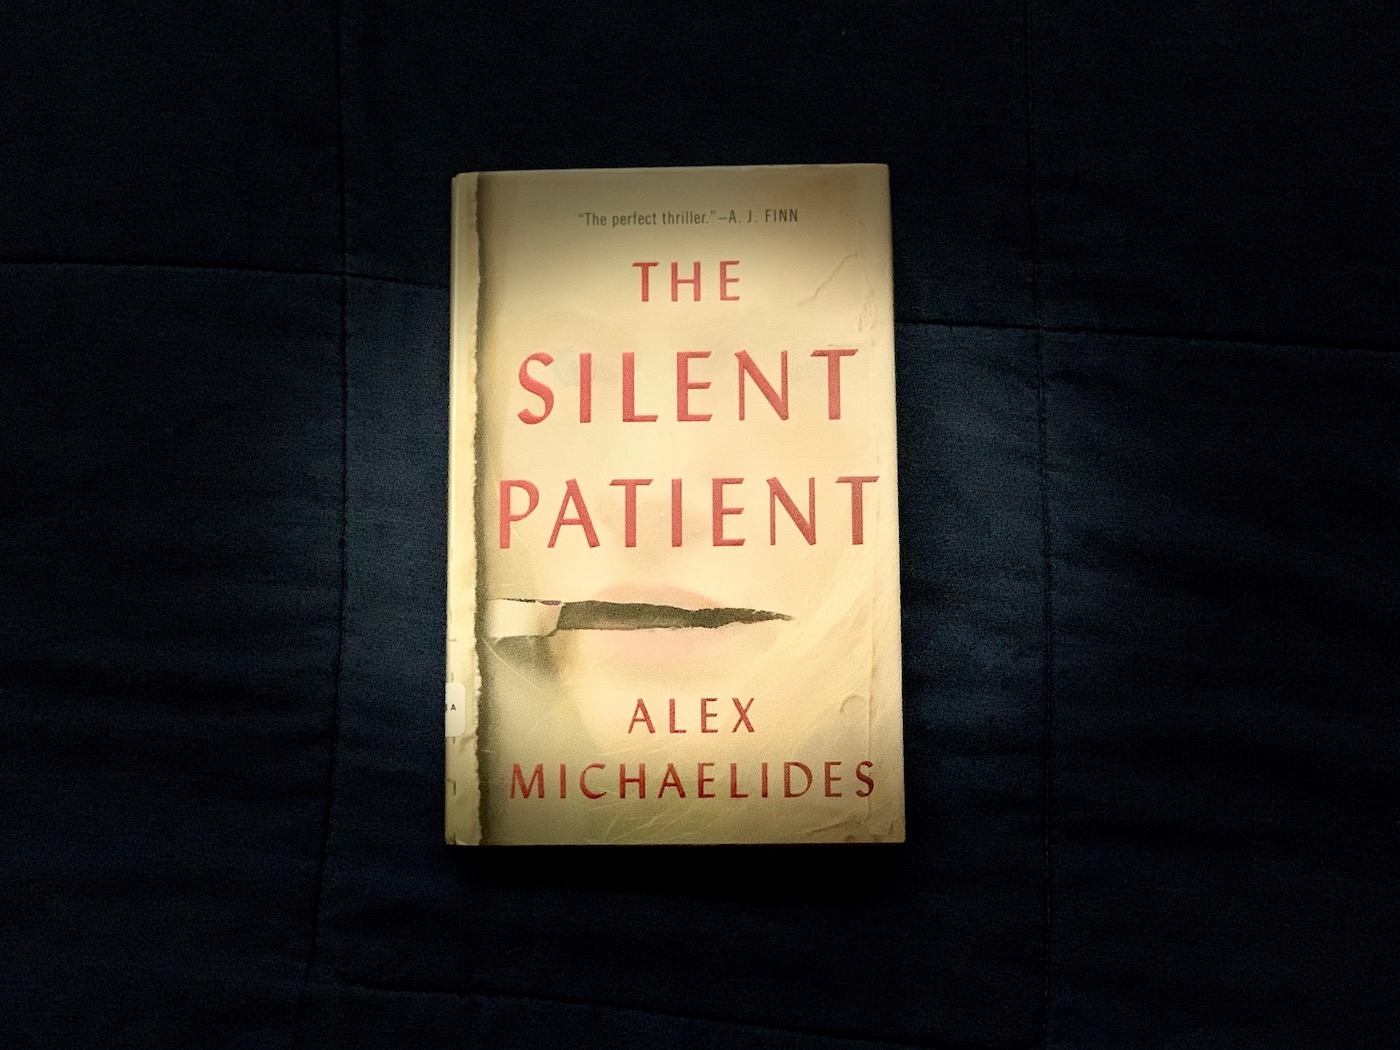 the silent patient questions